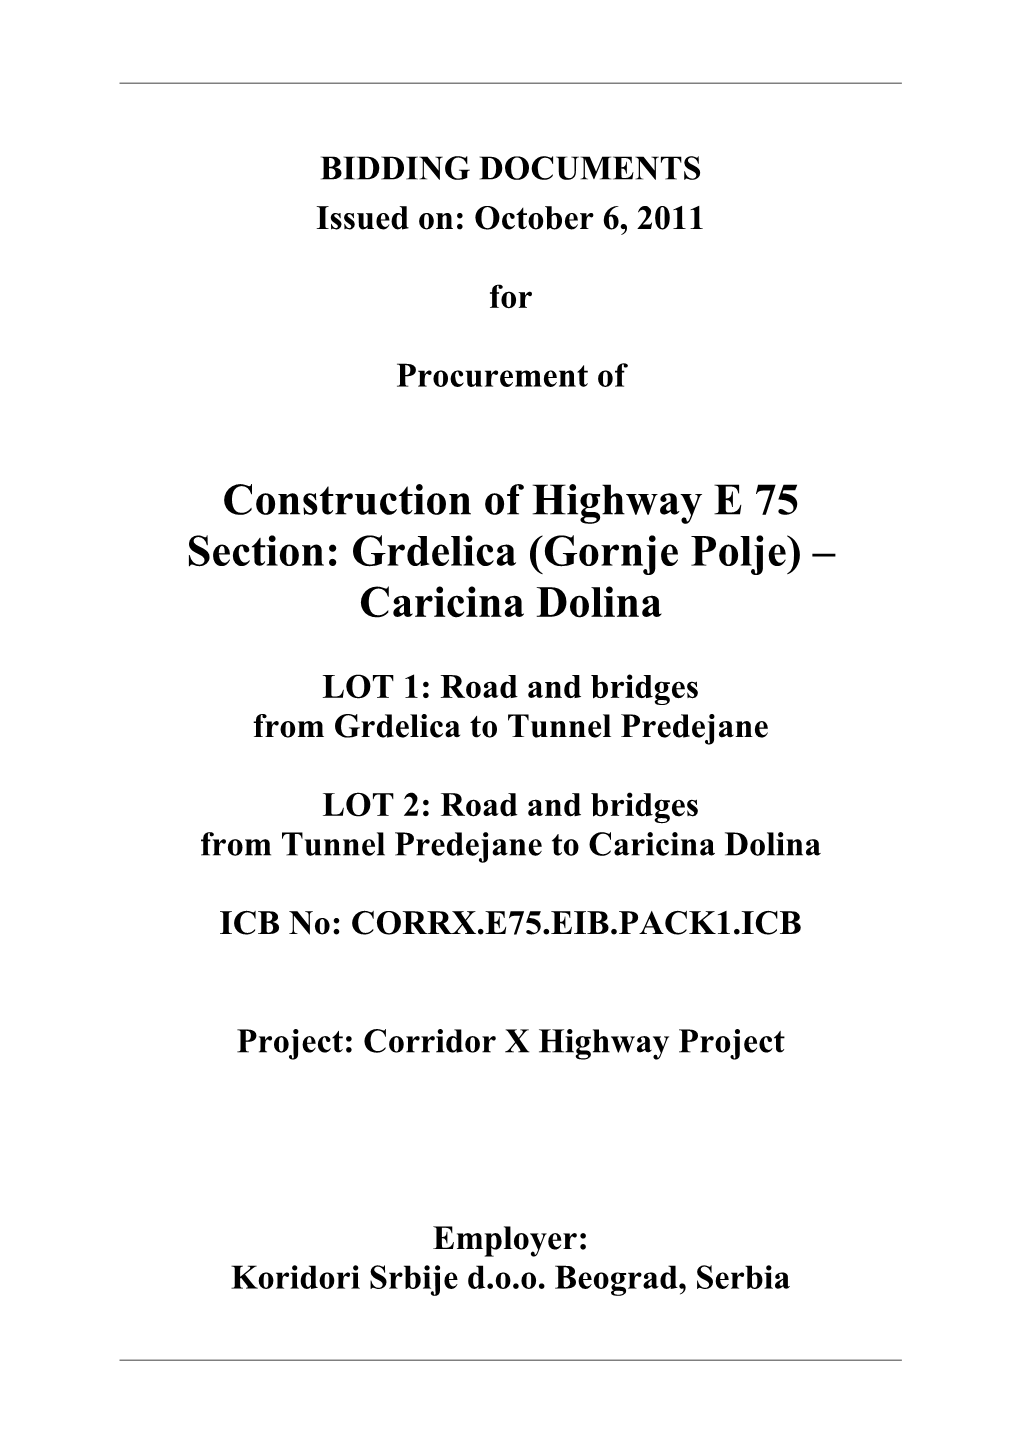 Construction of Highway E 75 Section: Grdelica (Gornje Polje) – Caricina Dolina